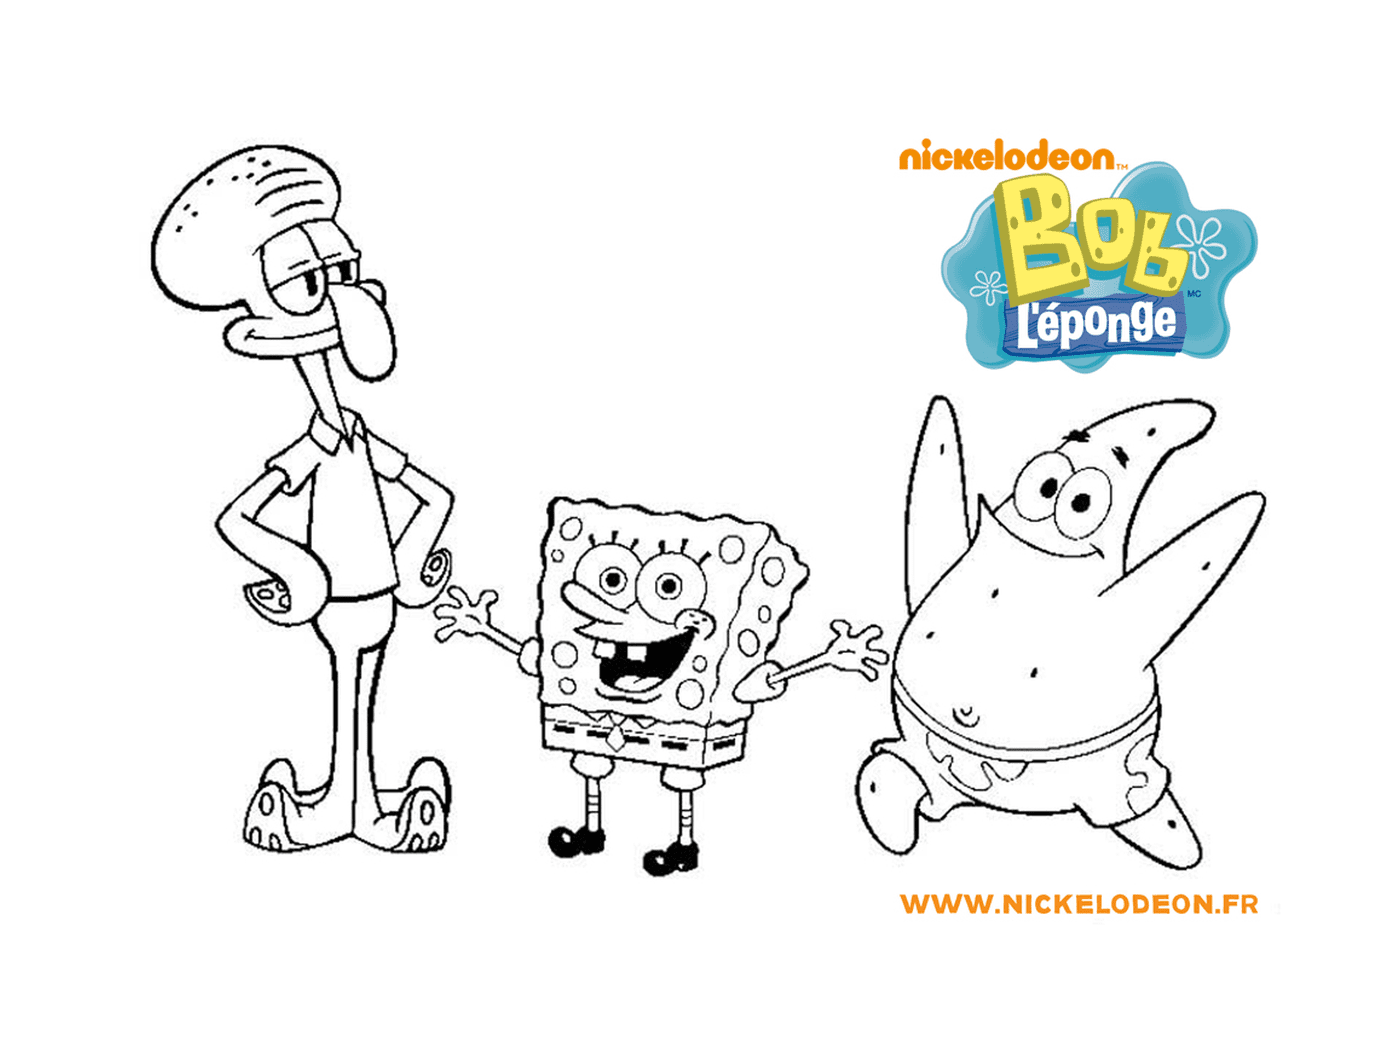  Spongebob and his friends 